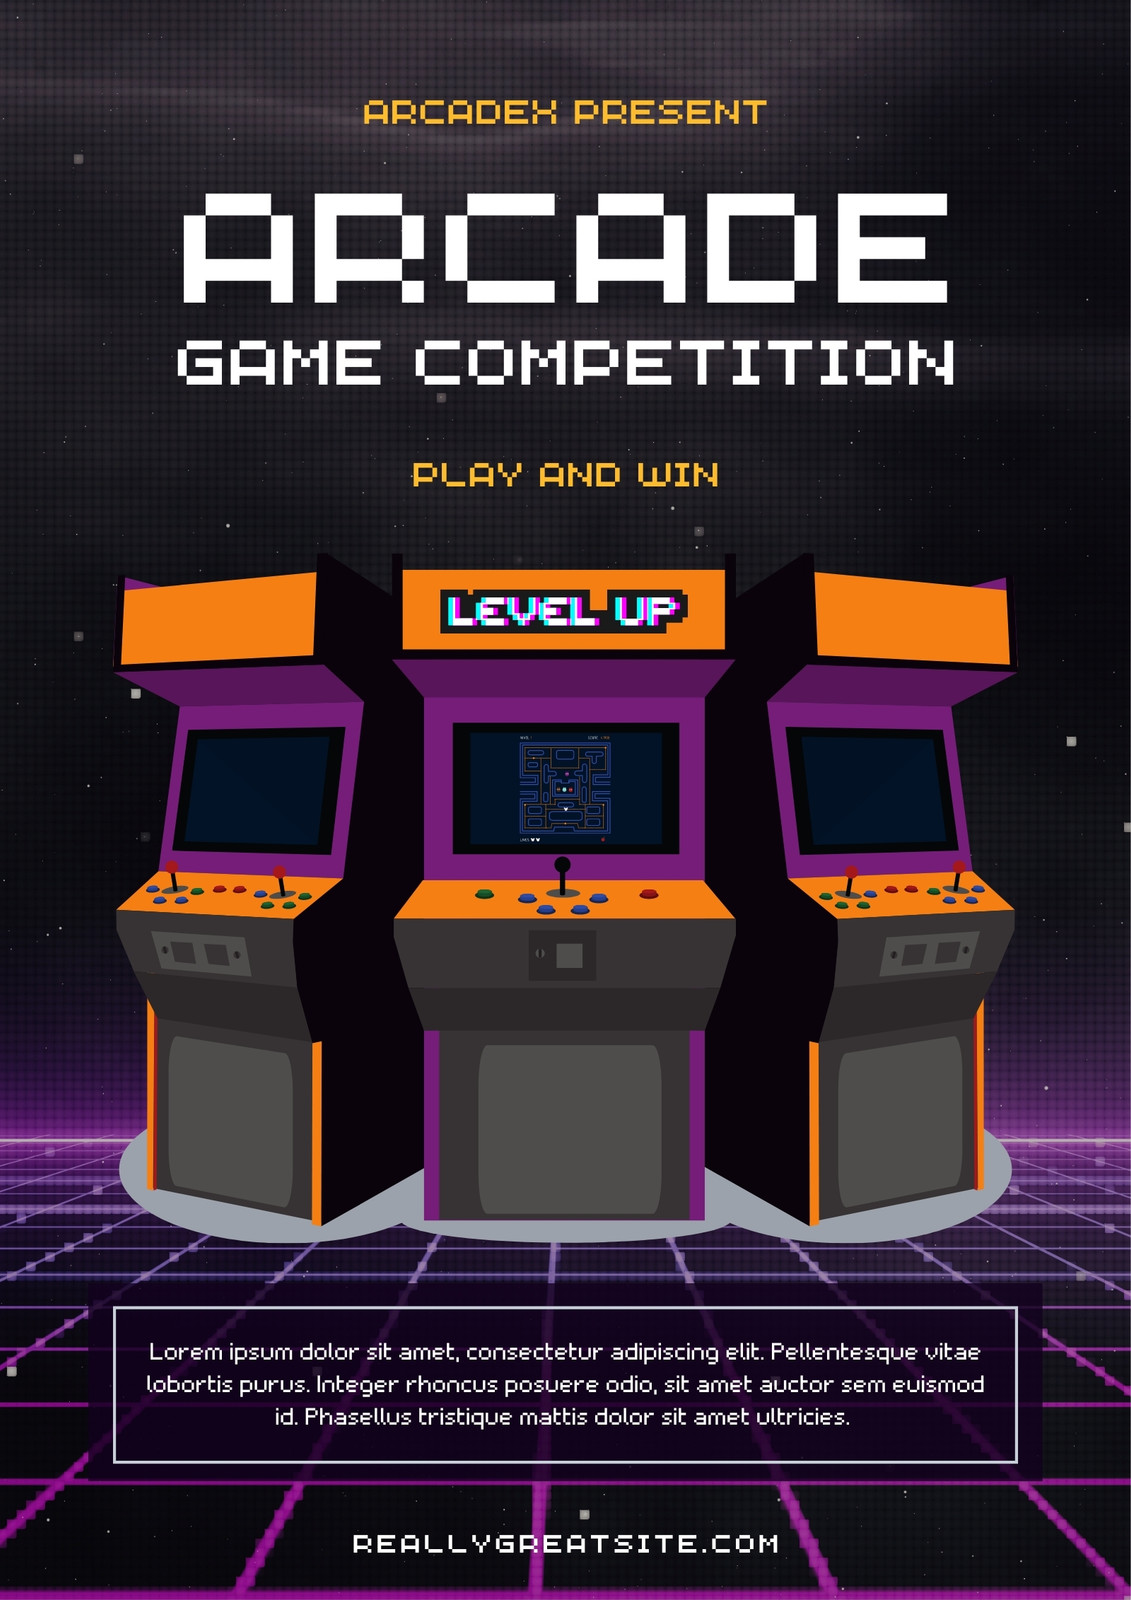 Retro Gaming Flyer Arcade Cabinet MockUp Poster